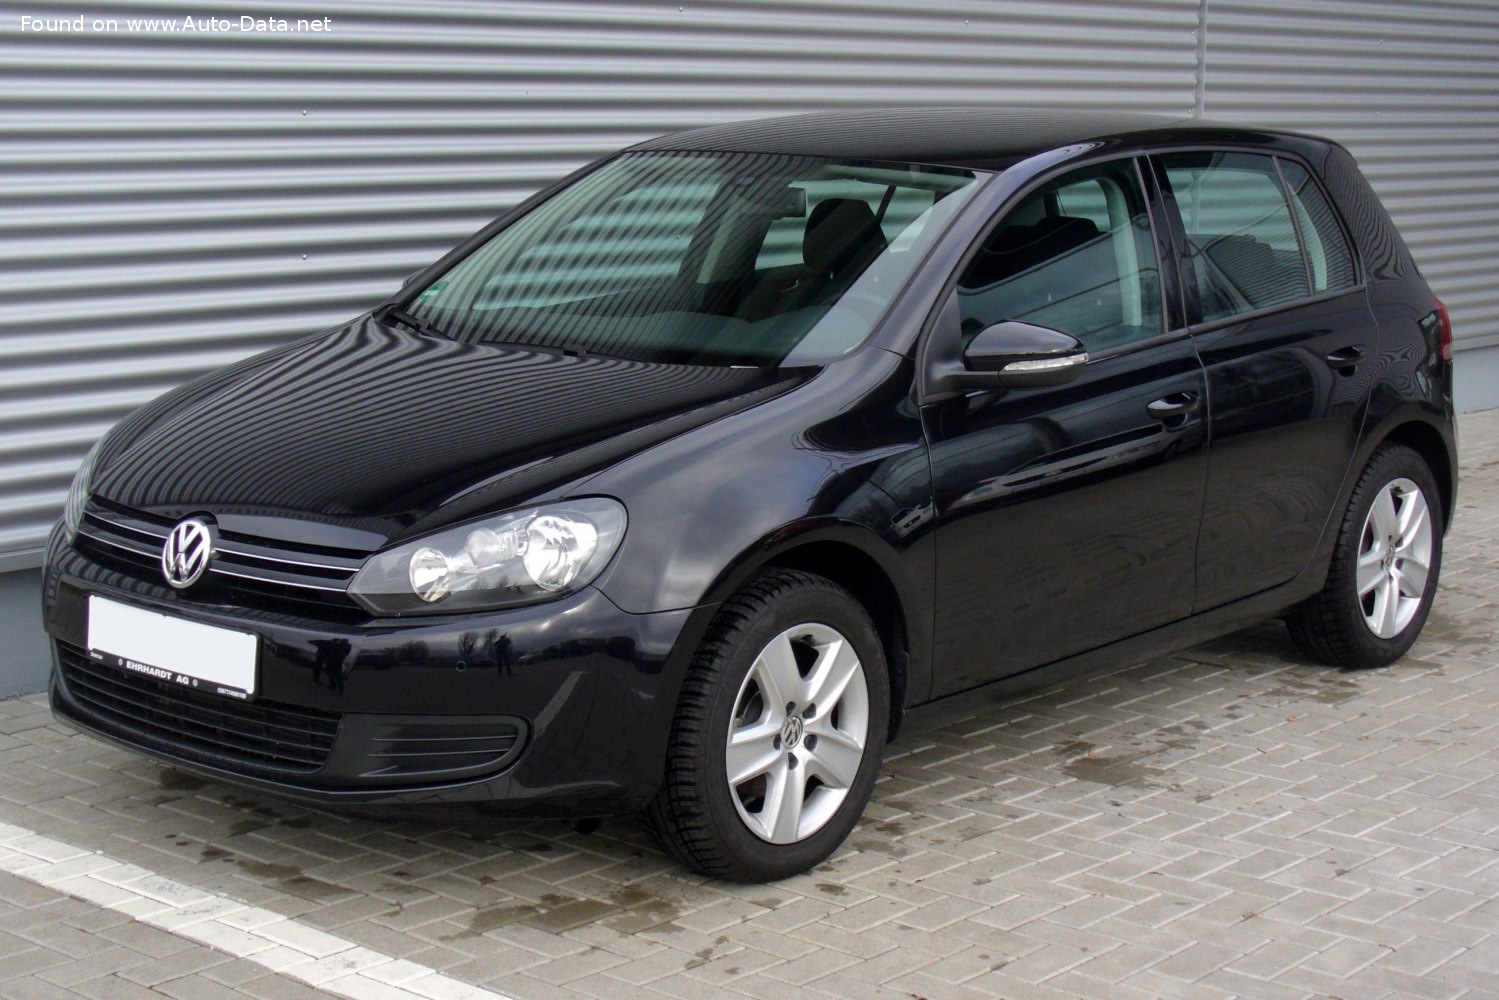 2008 Volkswagen Golf VI (5-door) 1.4 TSI (122 Hp)  Technical specs, data, fuel  consumption, Dimensions